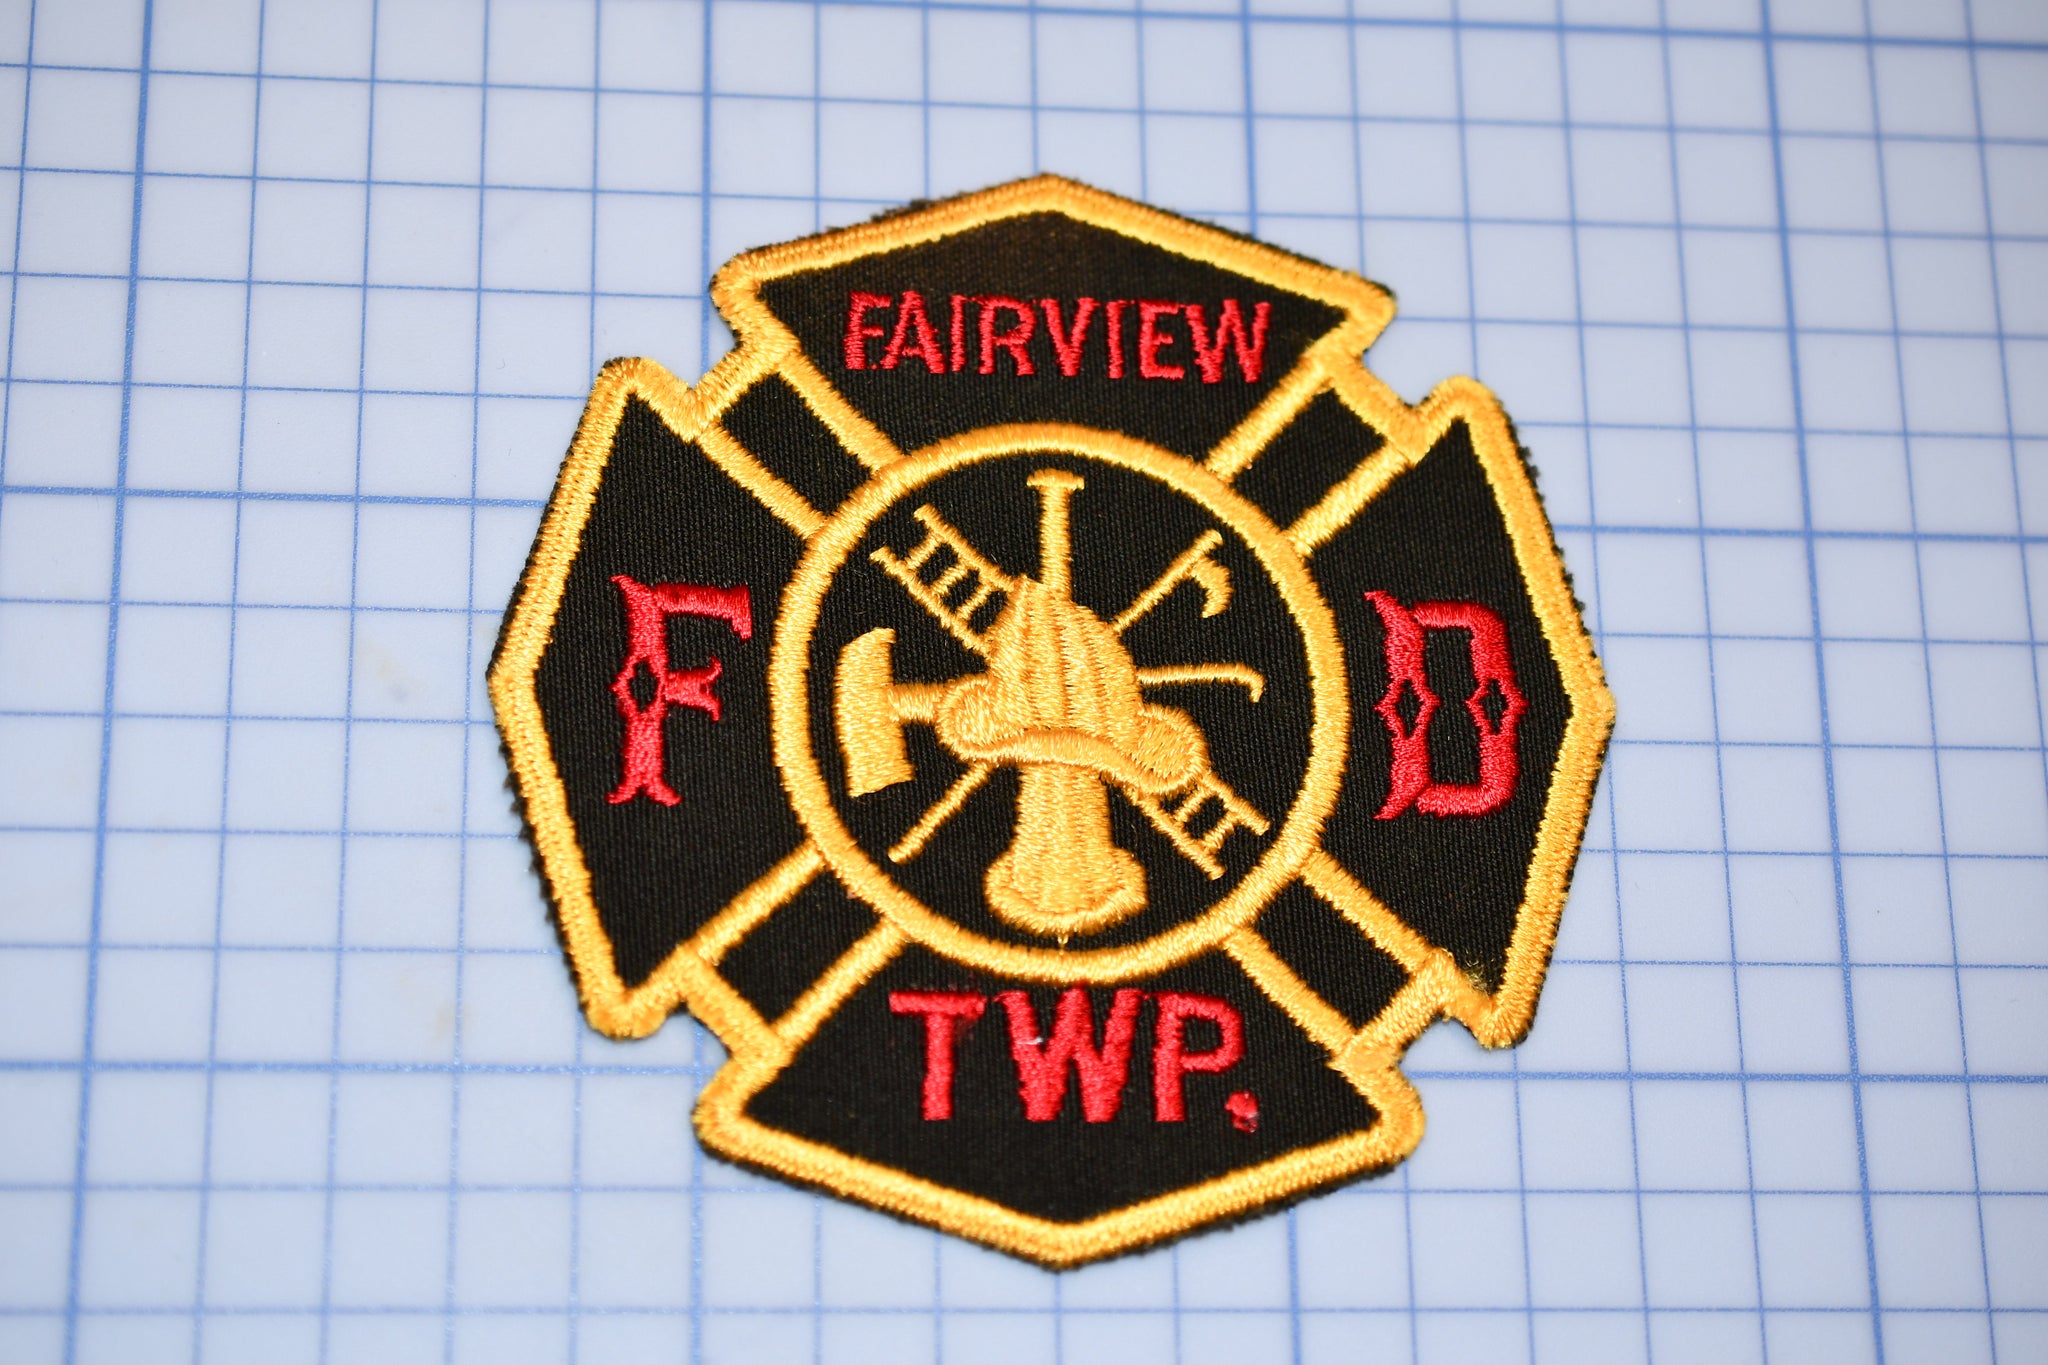 Fairview Township Pennsylvania Fire Department Patch (B29-349)